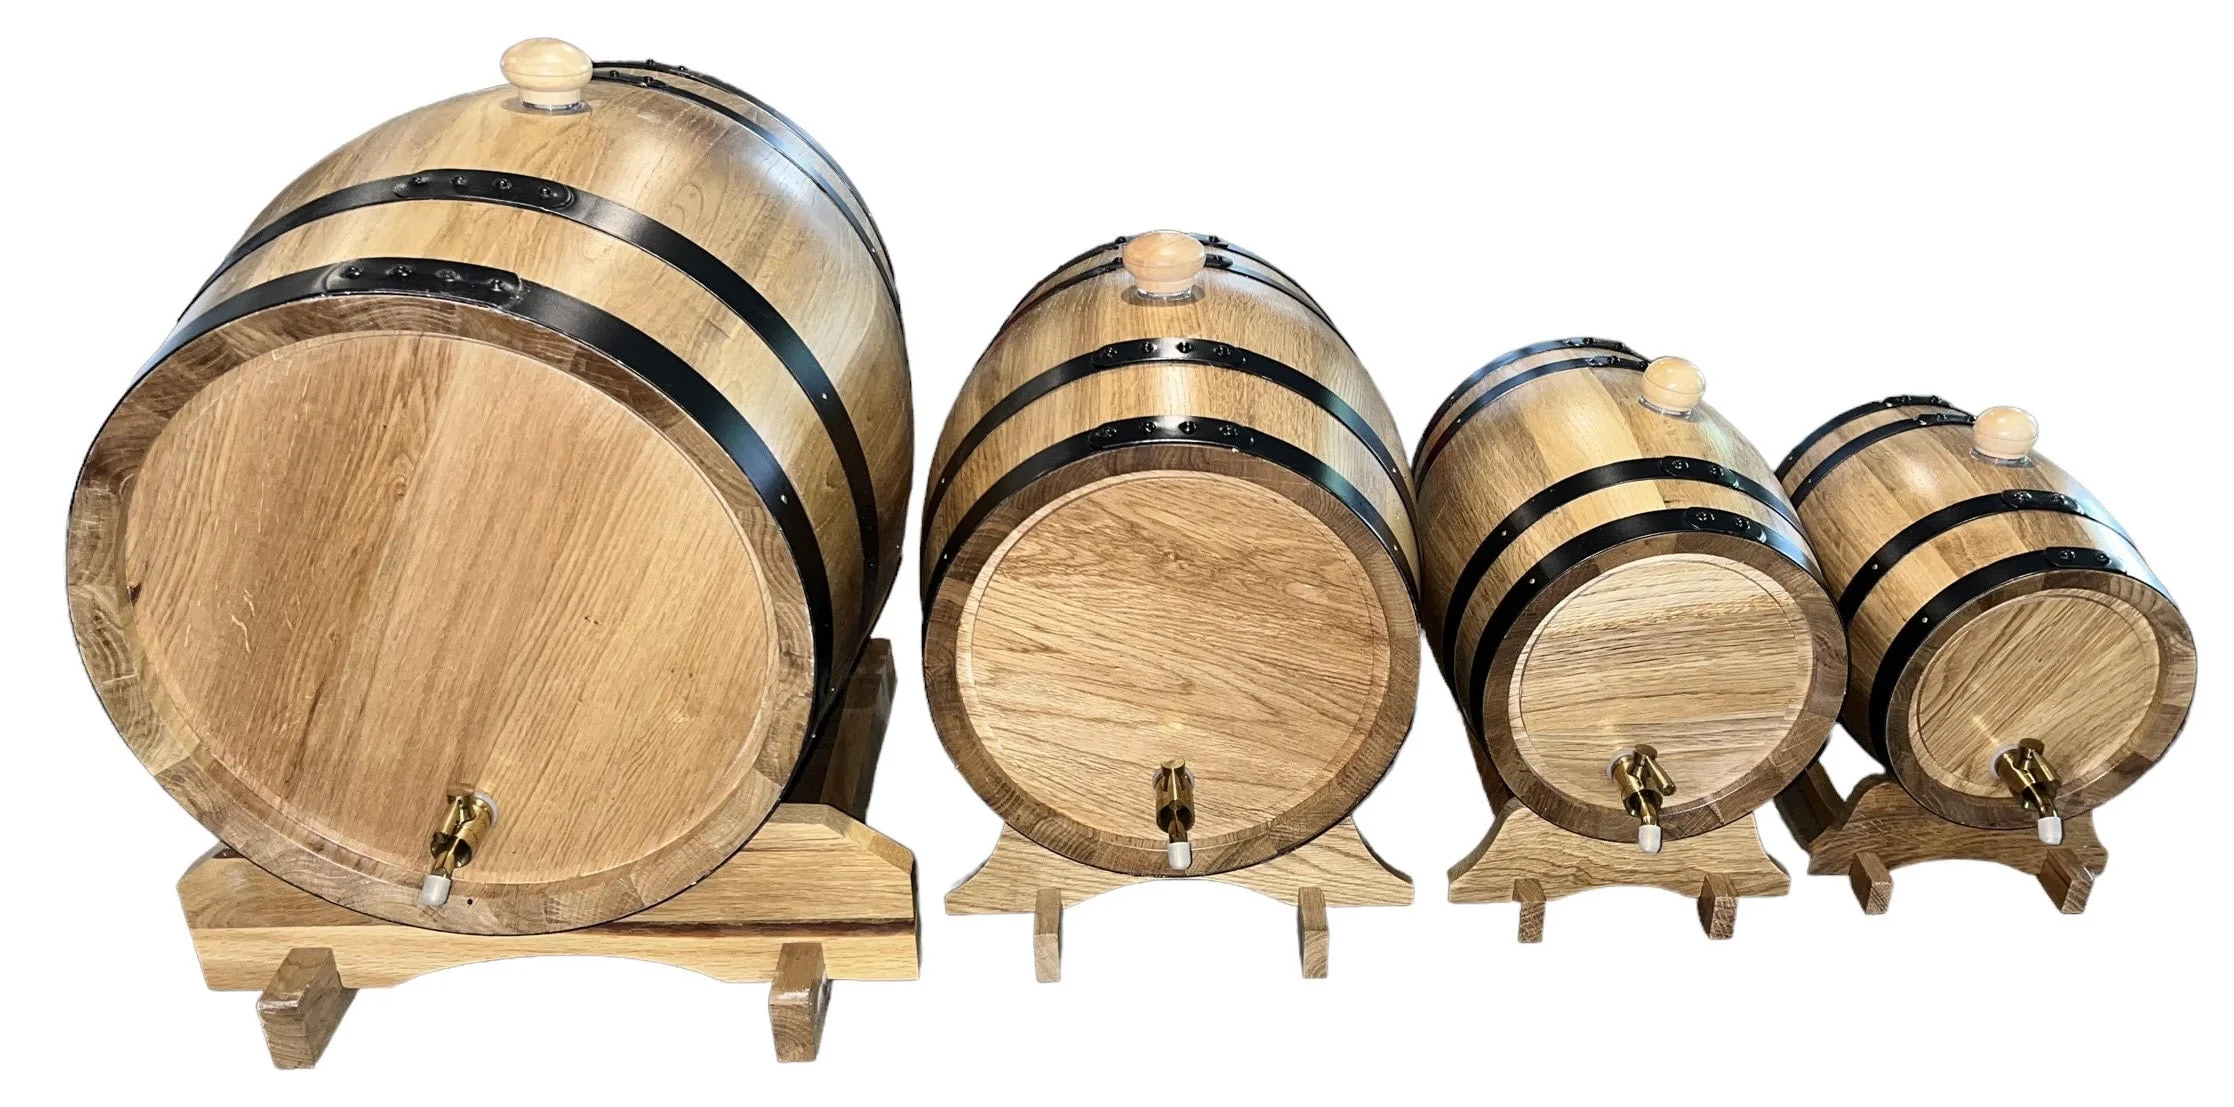 Charring oak barrels: The effects